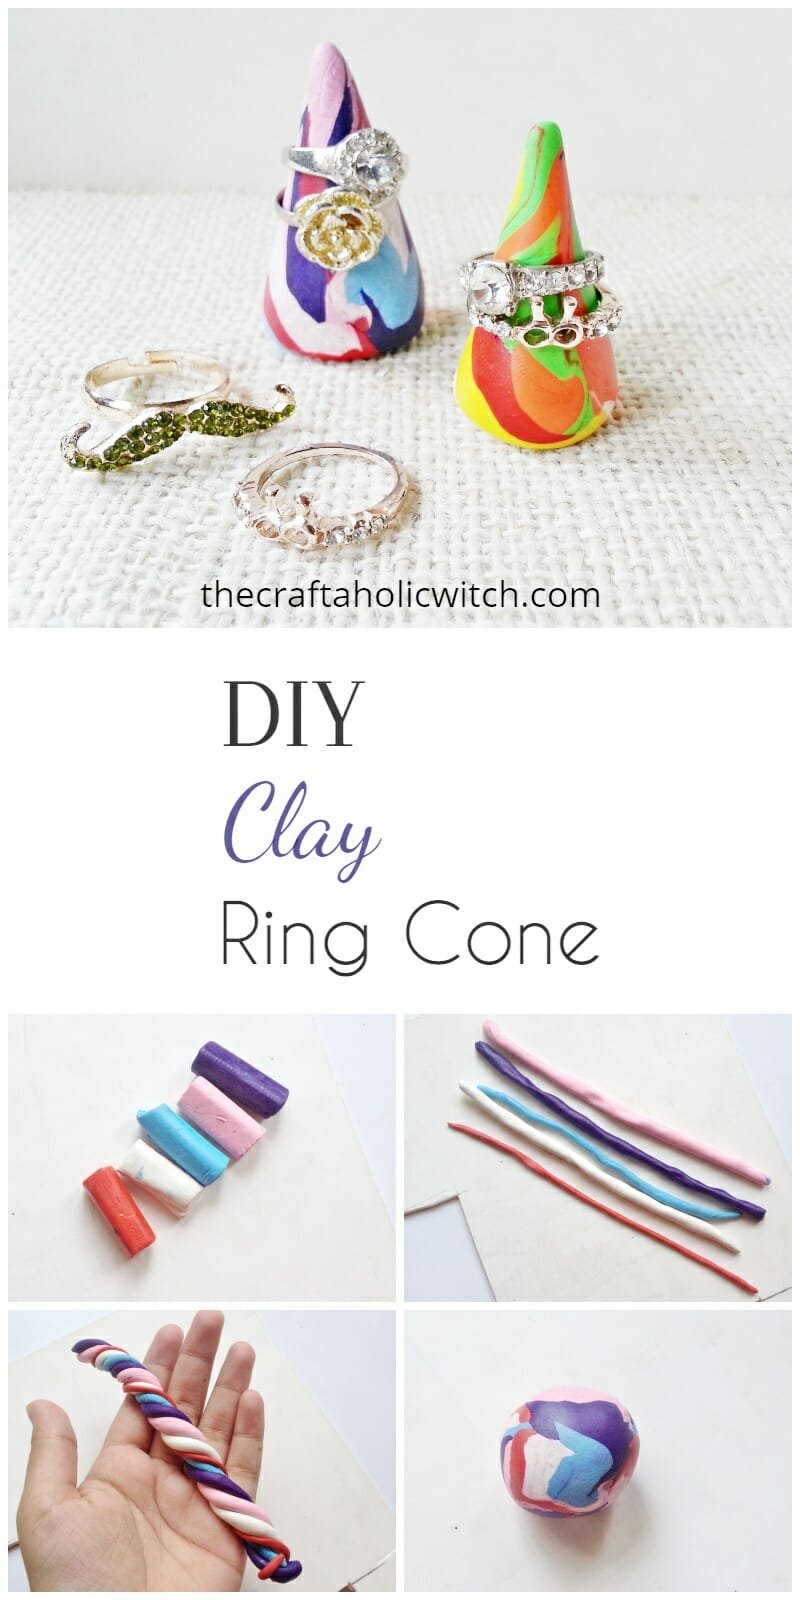 clay ring cone pin image 1 - DIY Cone Ring Displays